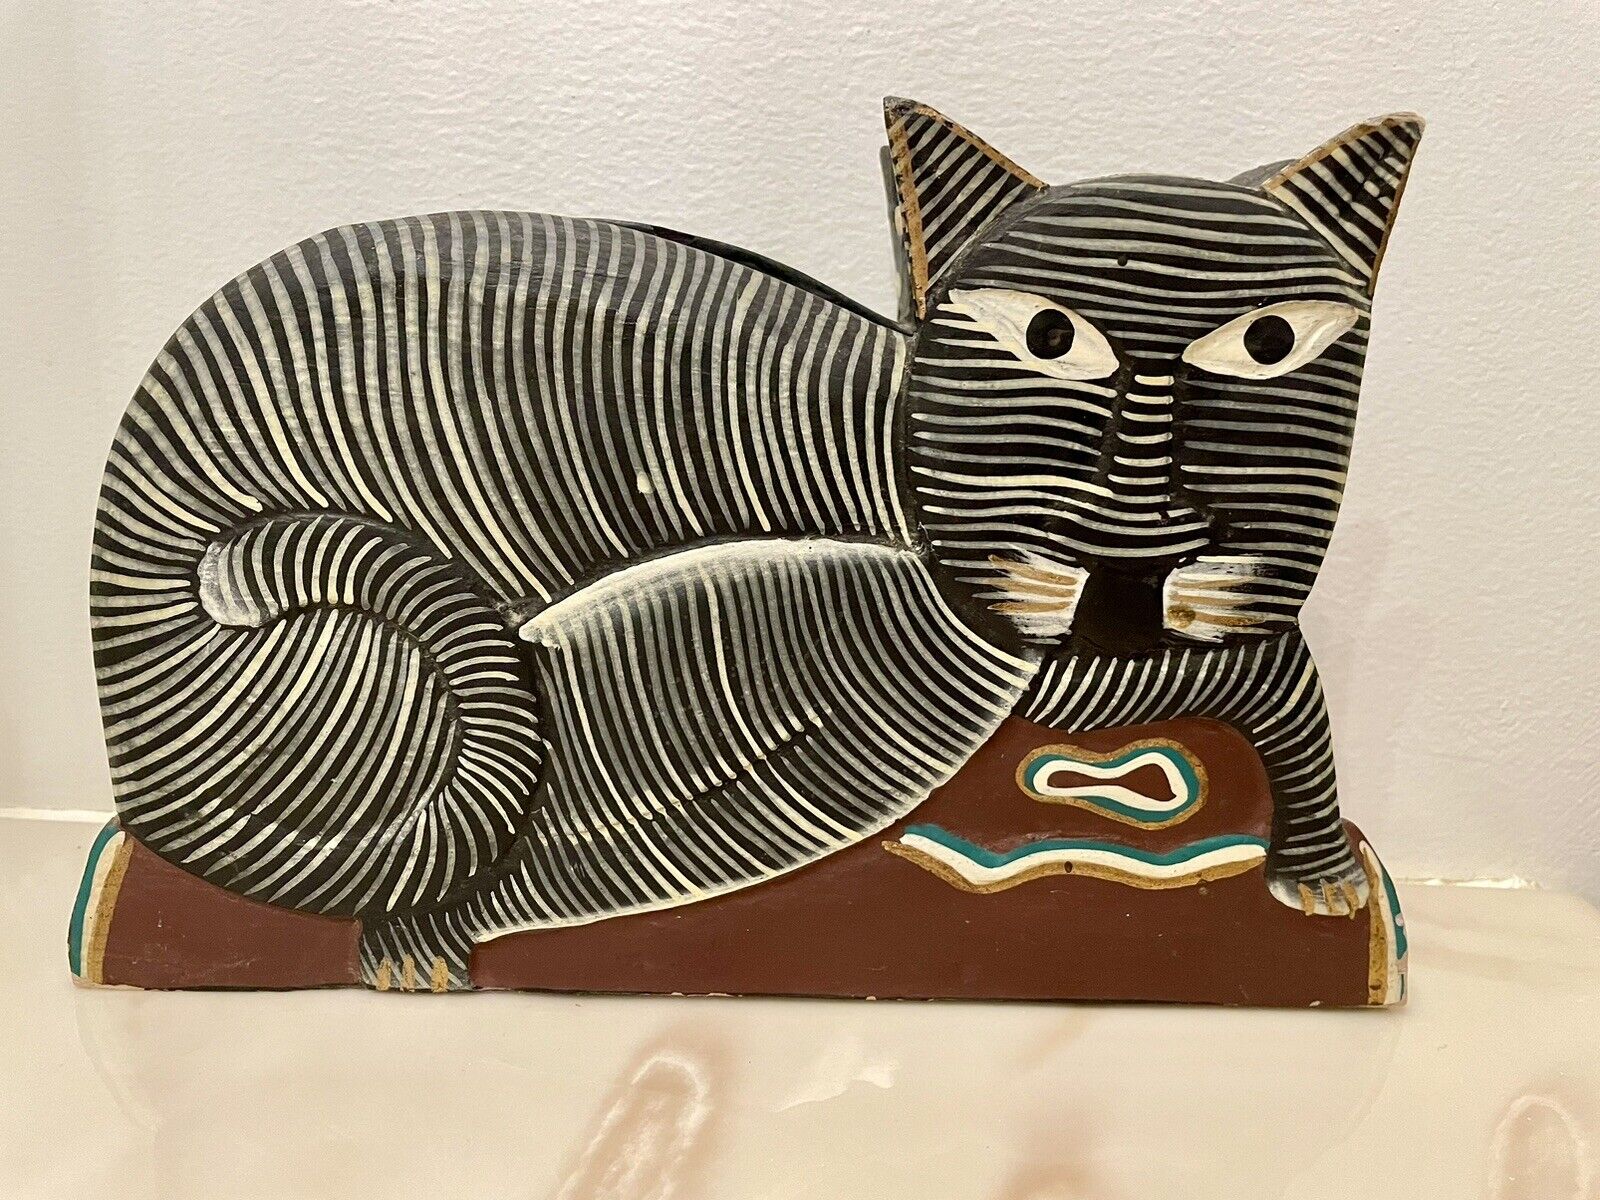 Vintage Laurel Burch Style Cat - Envelope/Mail Napkin Holder - Hand Painted Wood